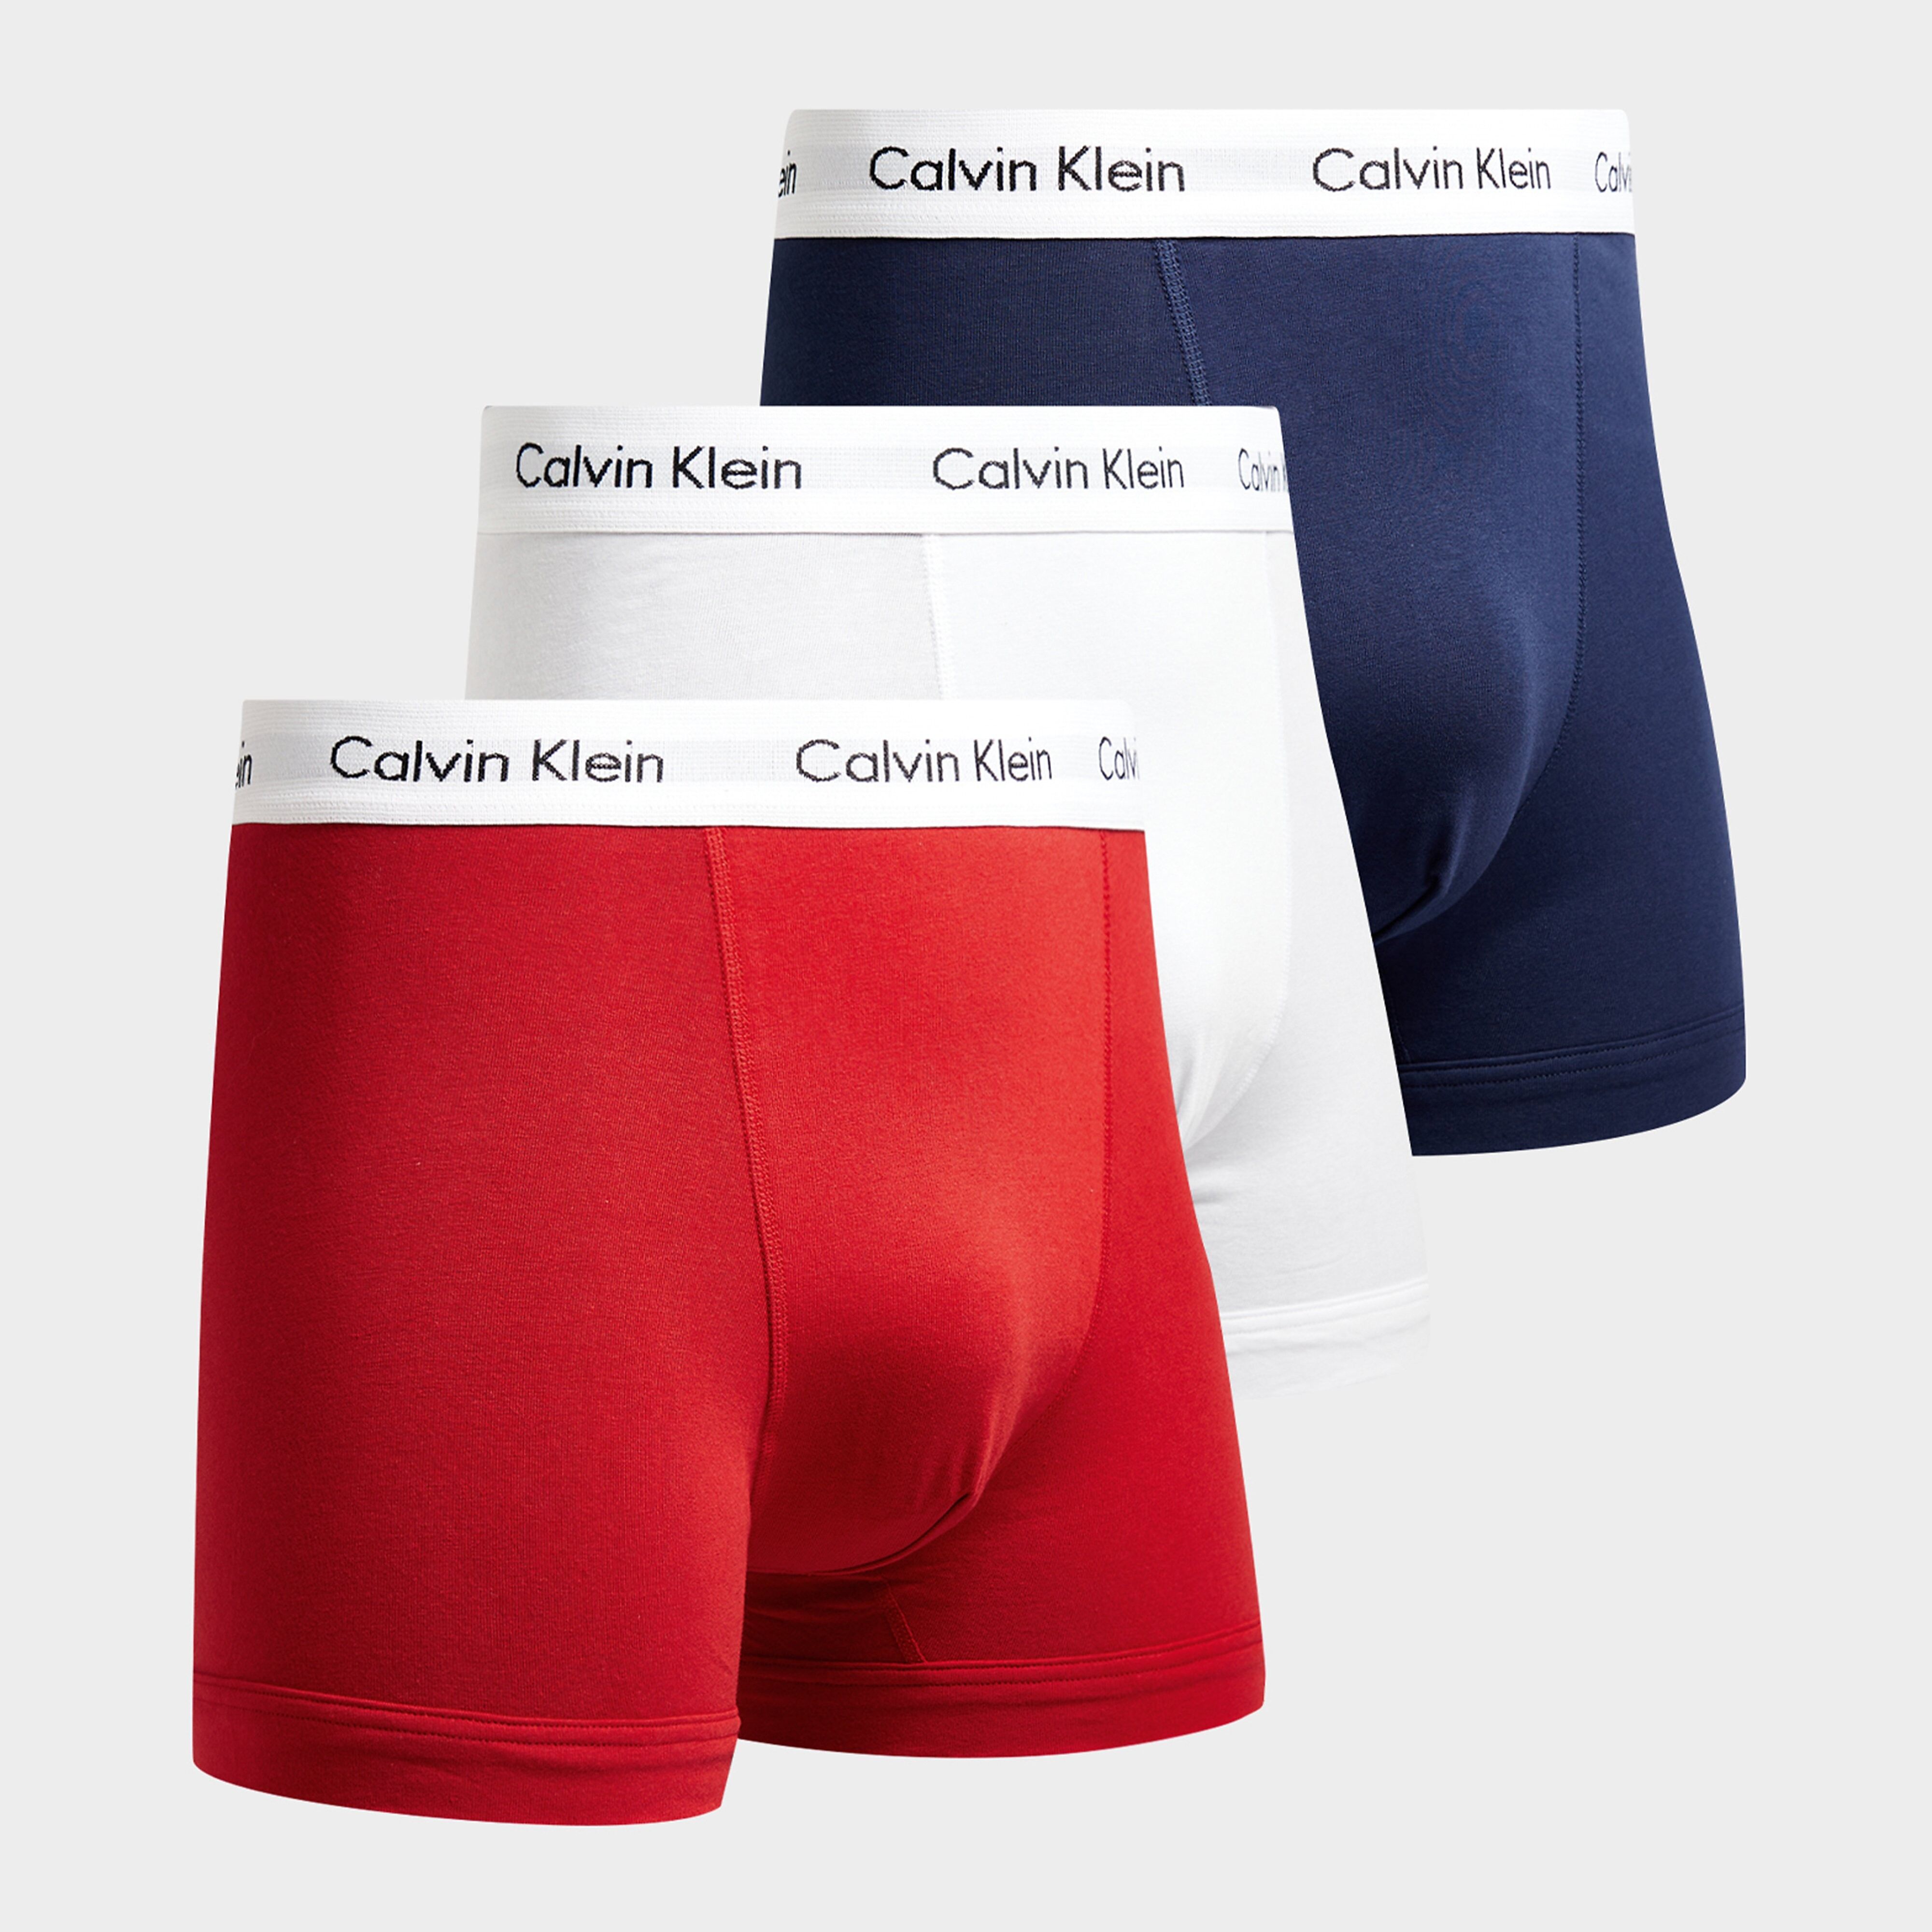 Calvin Klein Underwear 3-Pack Trunks - Blue/Red/White/Blue/Red - Mens  size: L